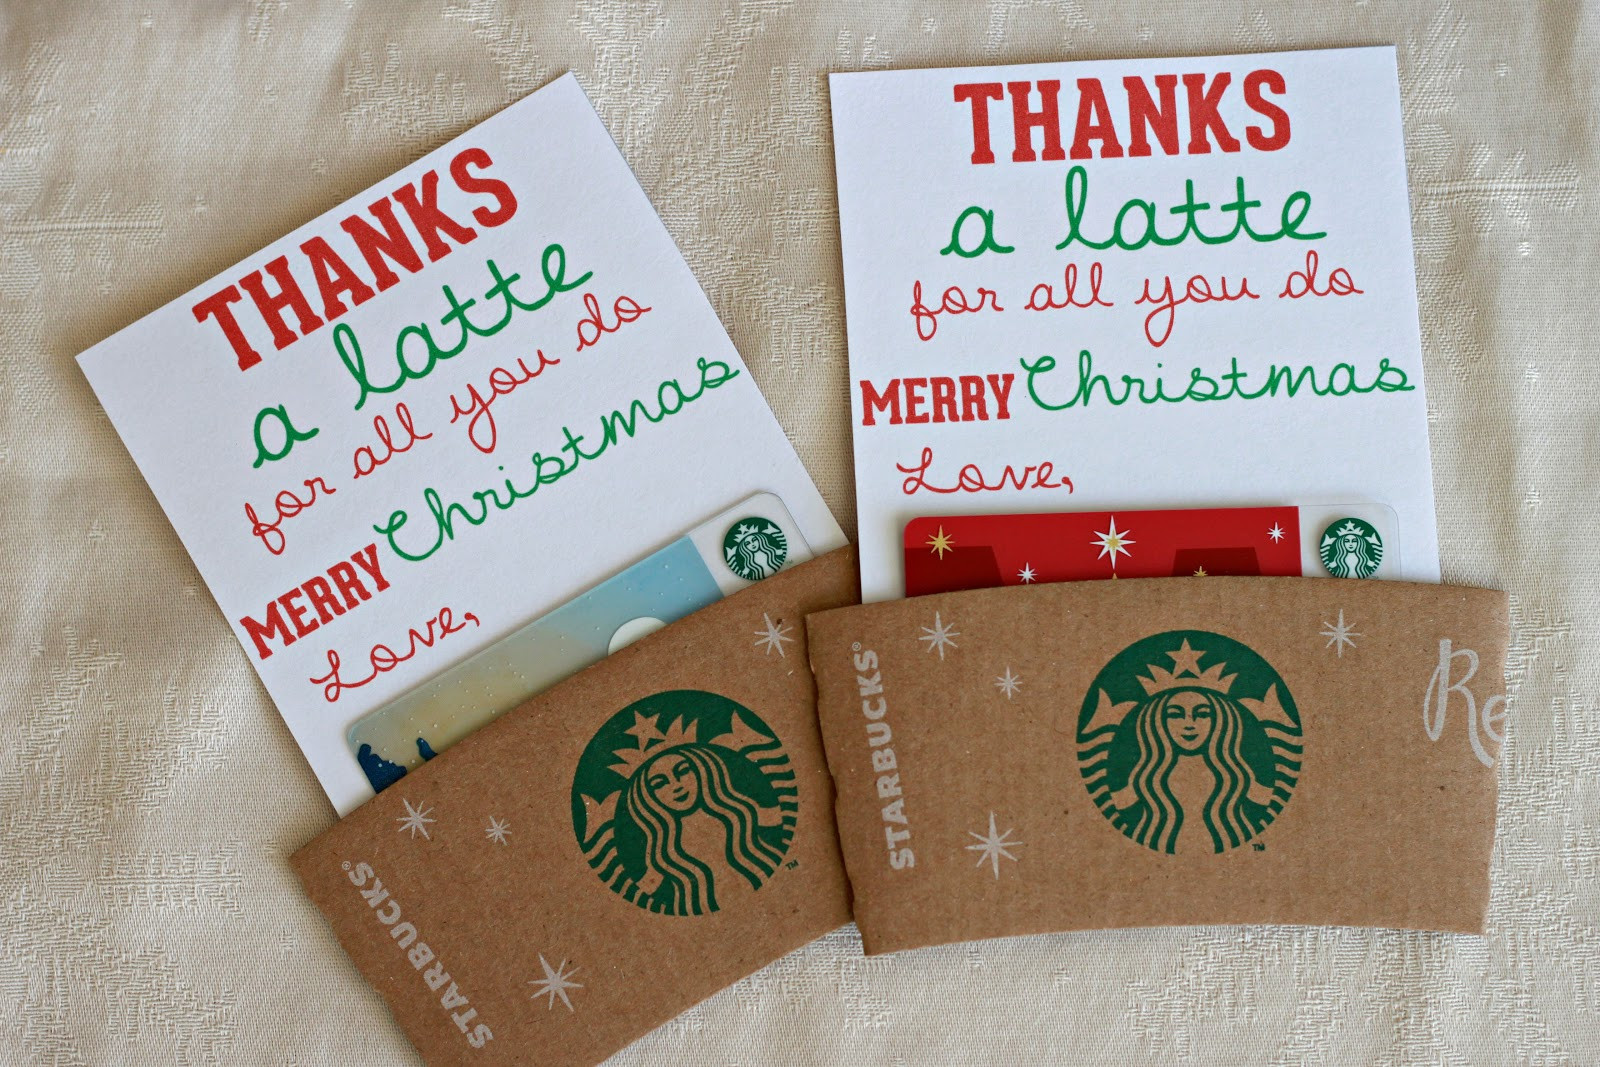 Best ideas about Good Chrismas Gift Ideas
. Save or Pin Man Starkey thanks a latte Now.